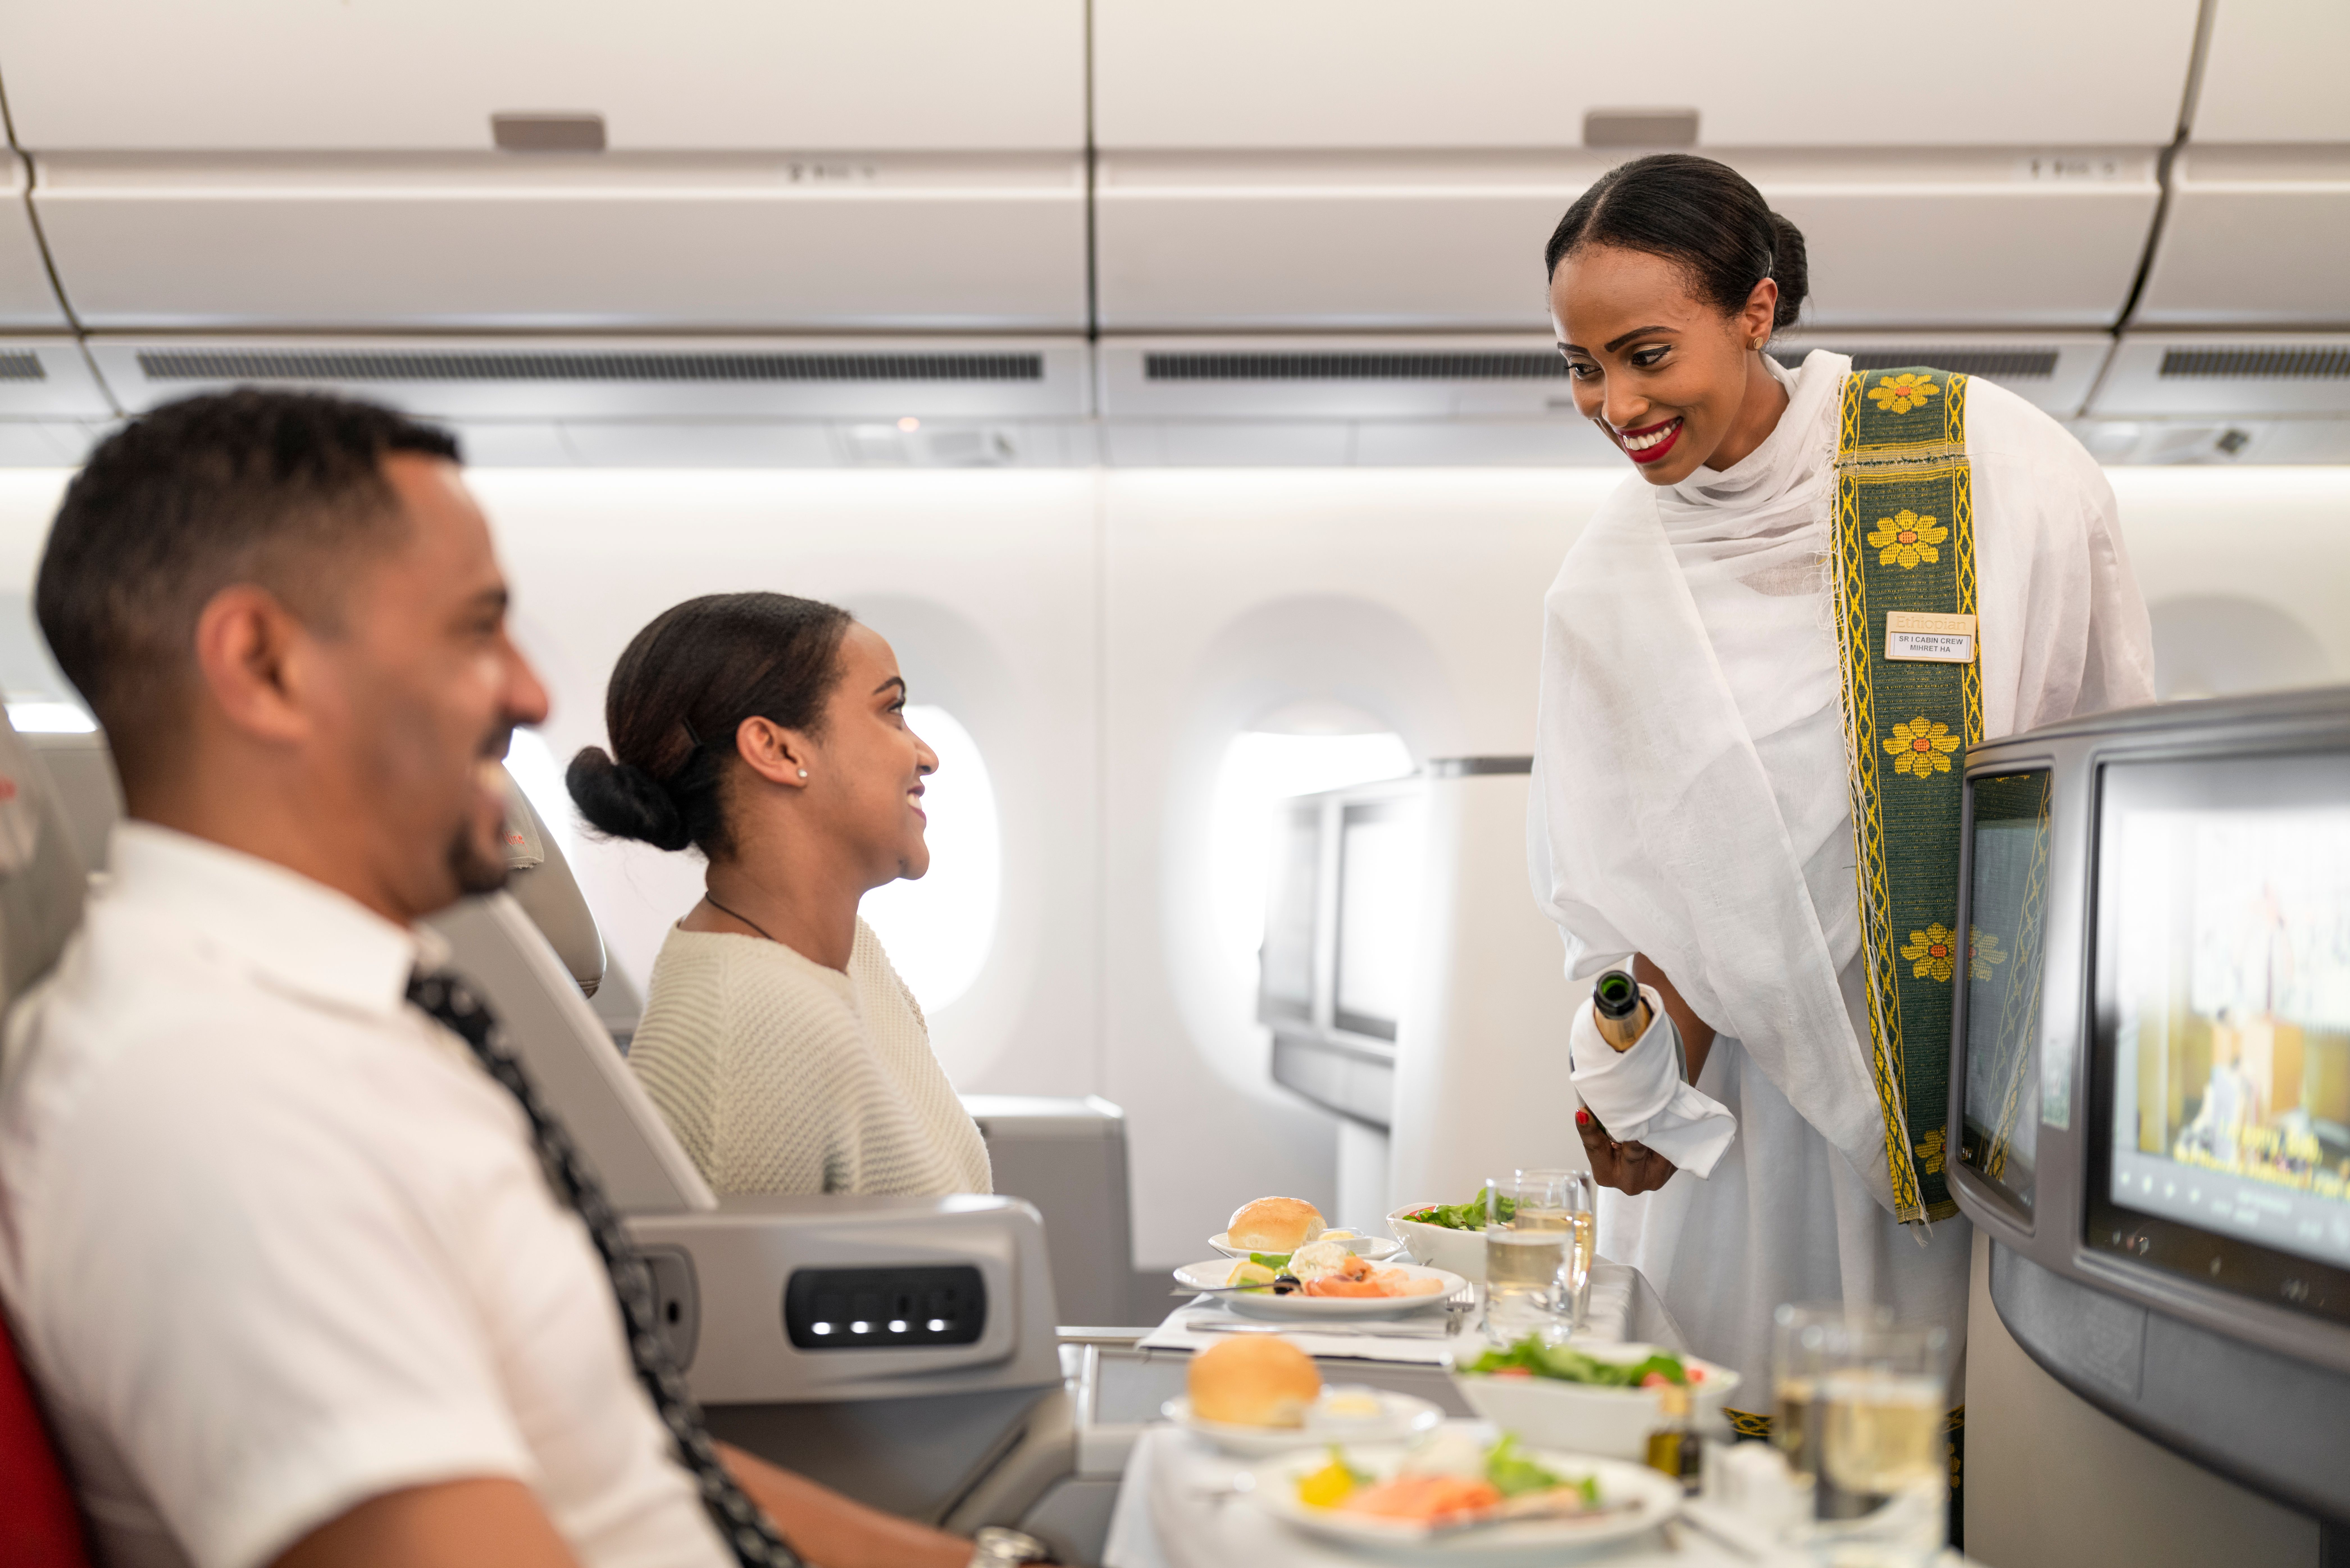 Ethiopian Airlines' award-winning onboard service